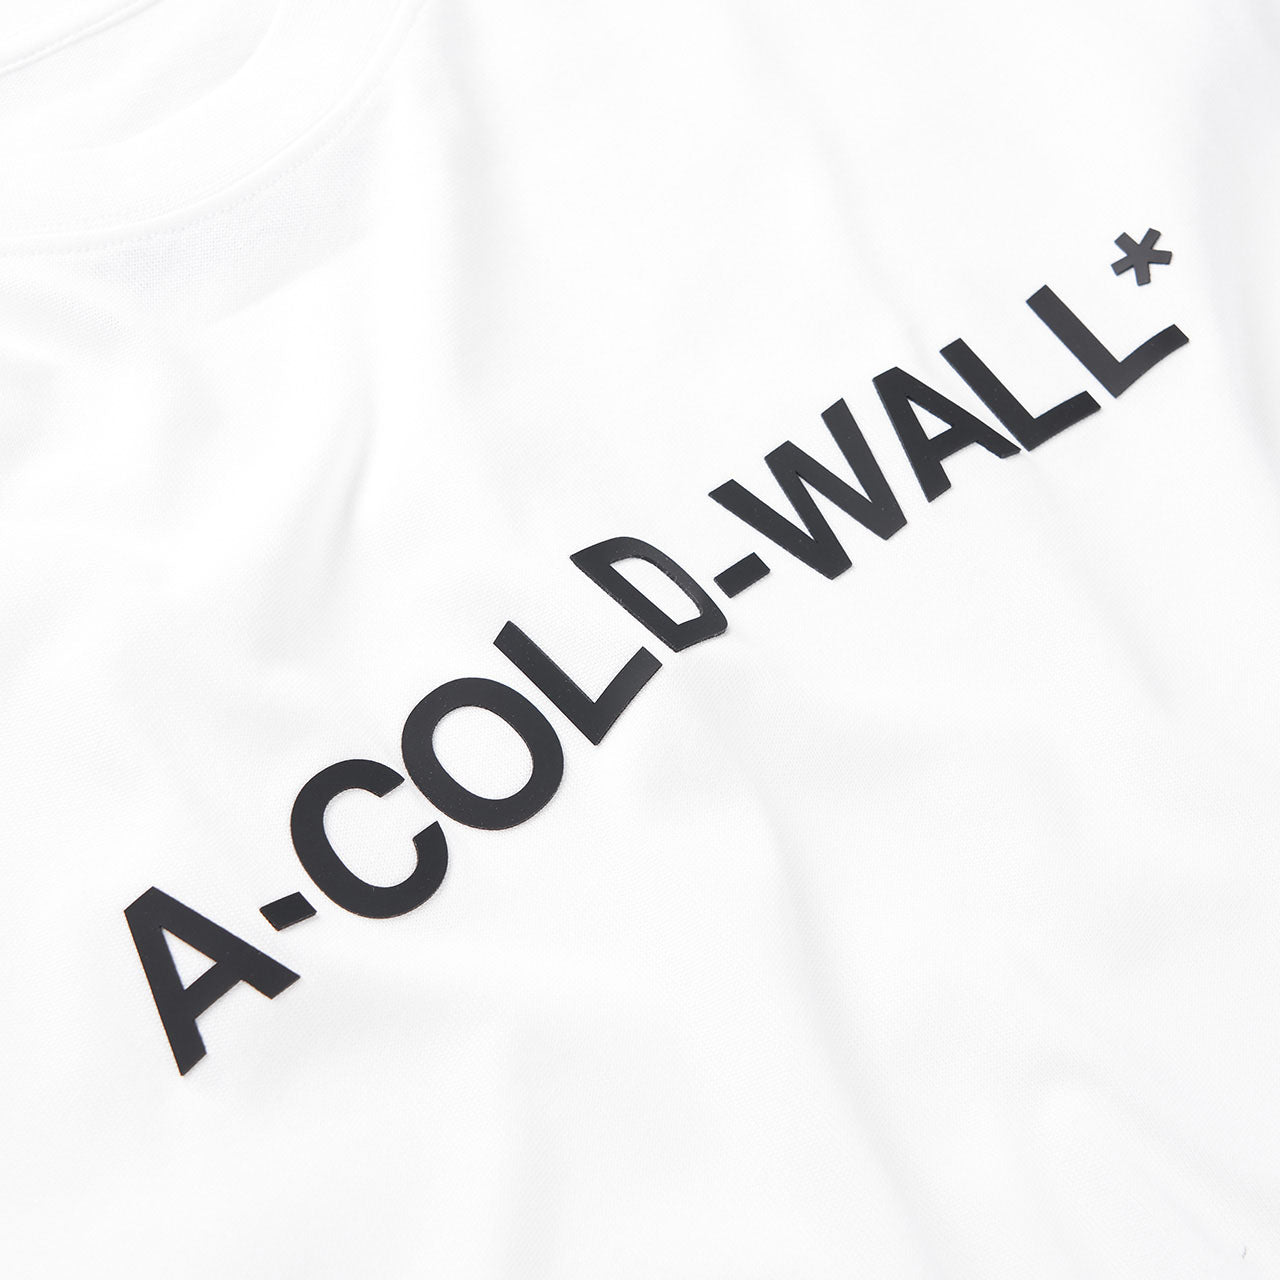 a-cold-wall* essential logo t-shirt (white)